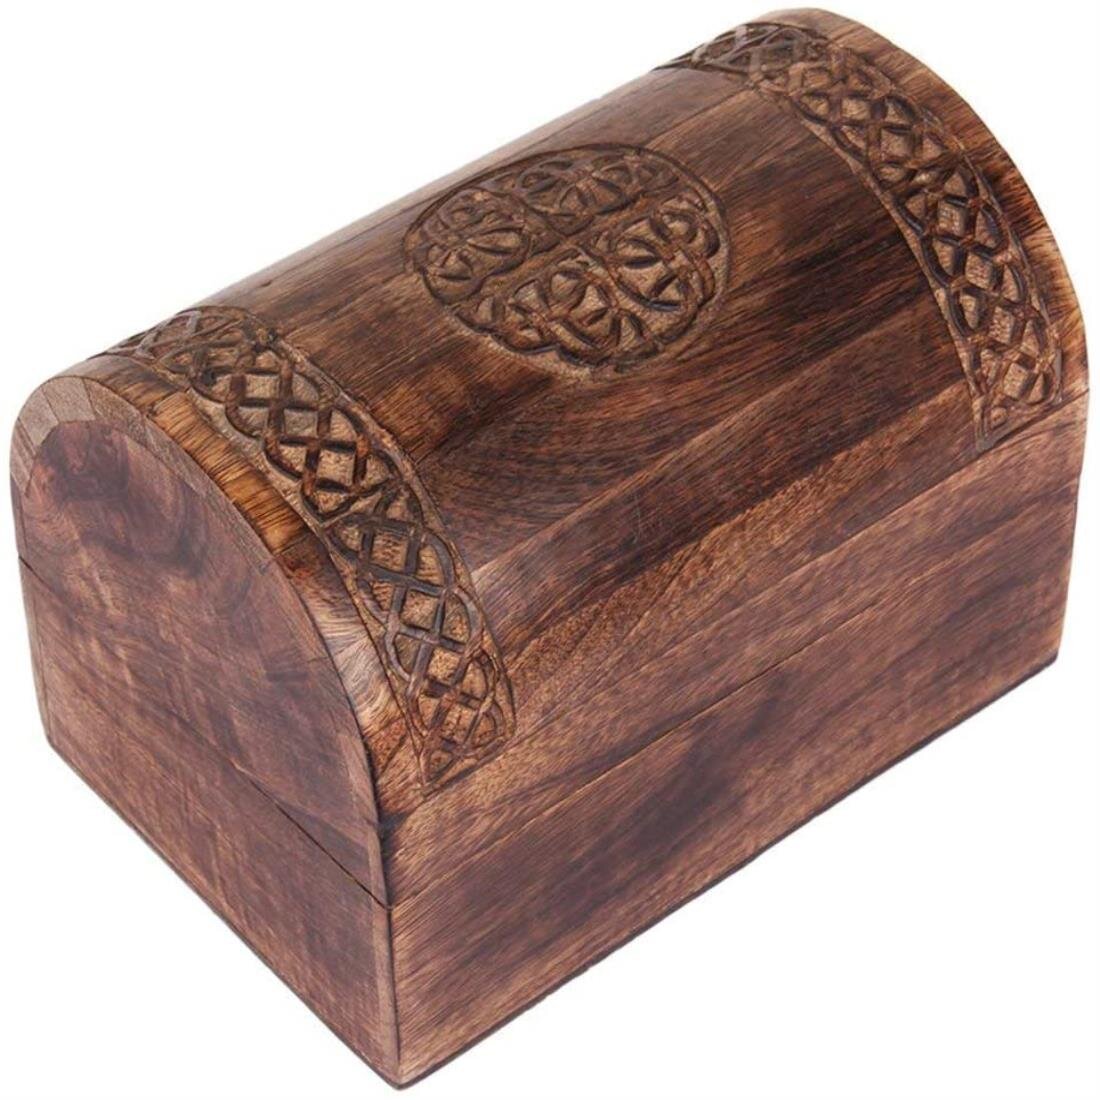 Fantastic Celtic Wooden treasure chest trinket box